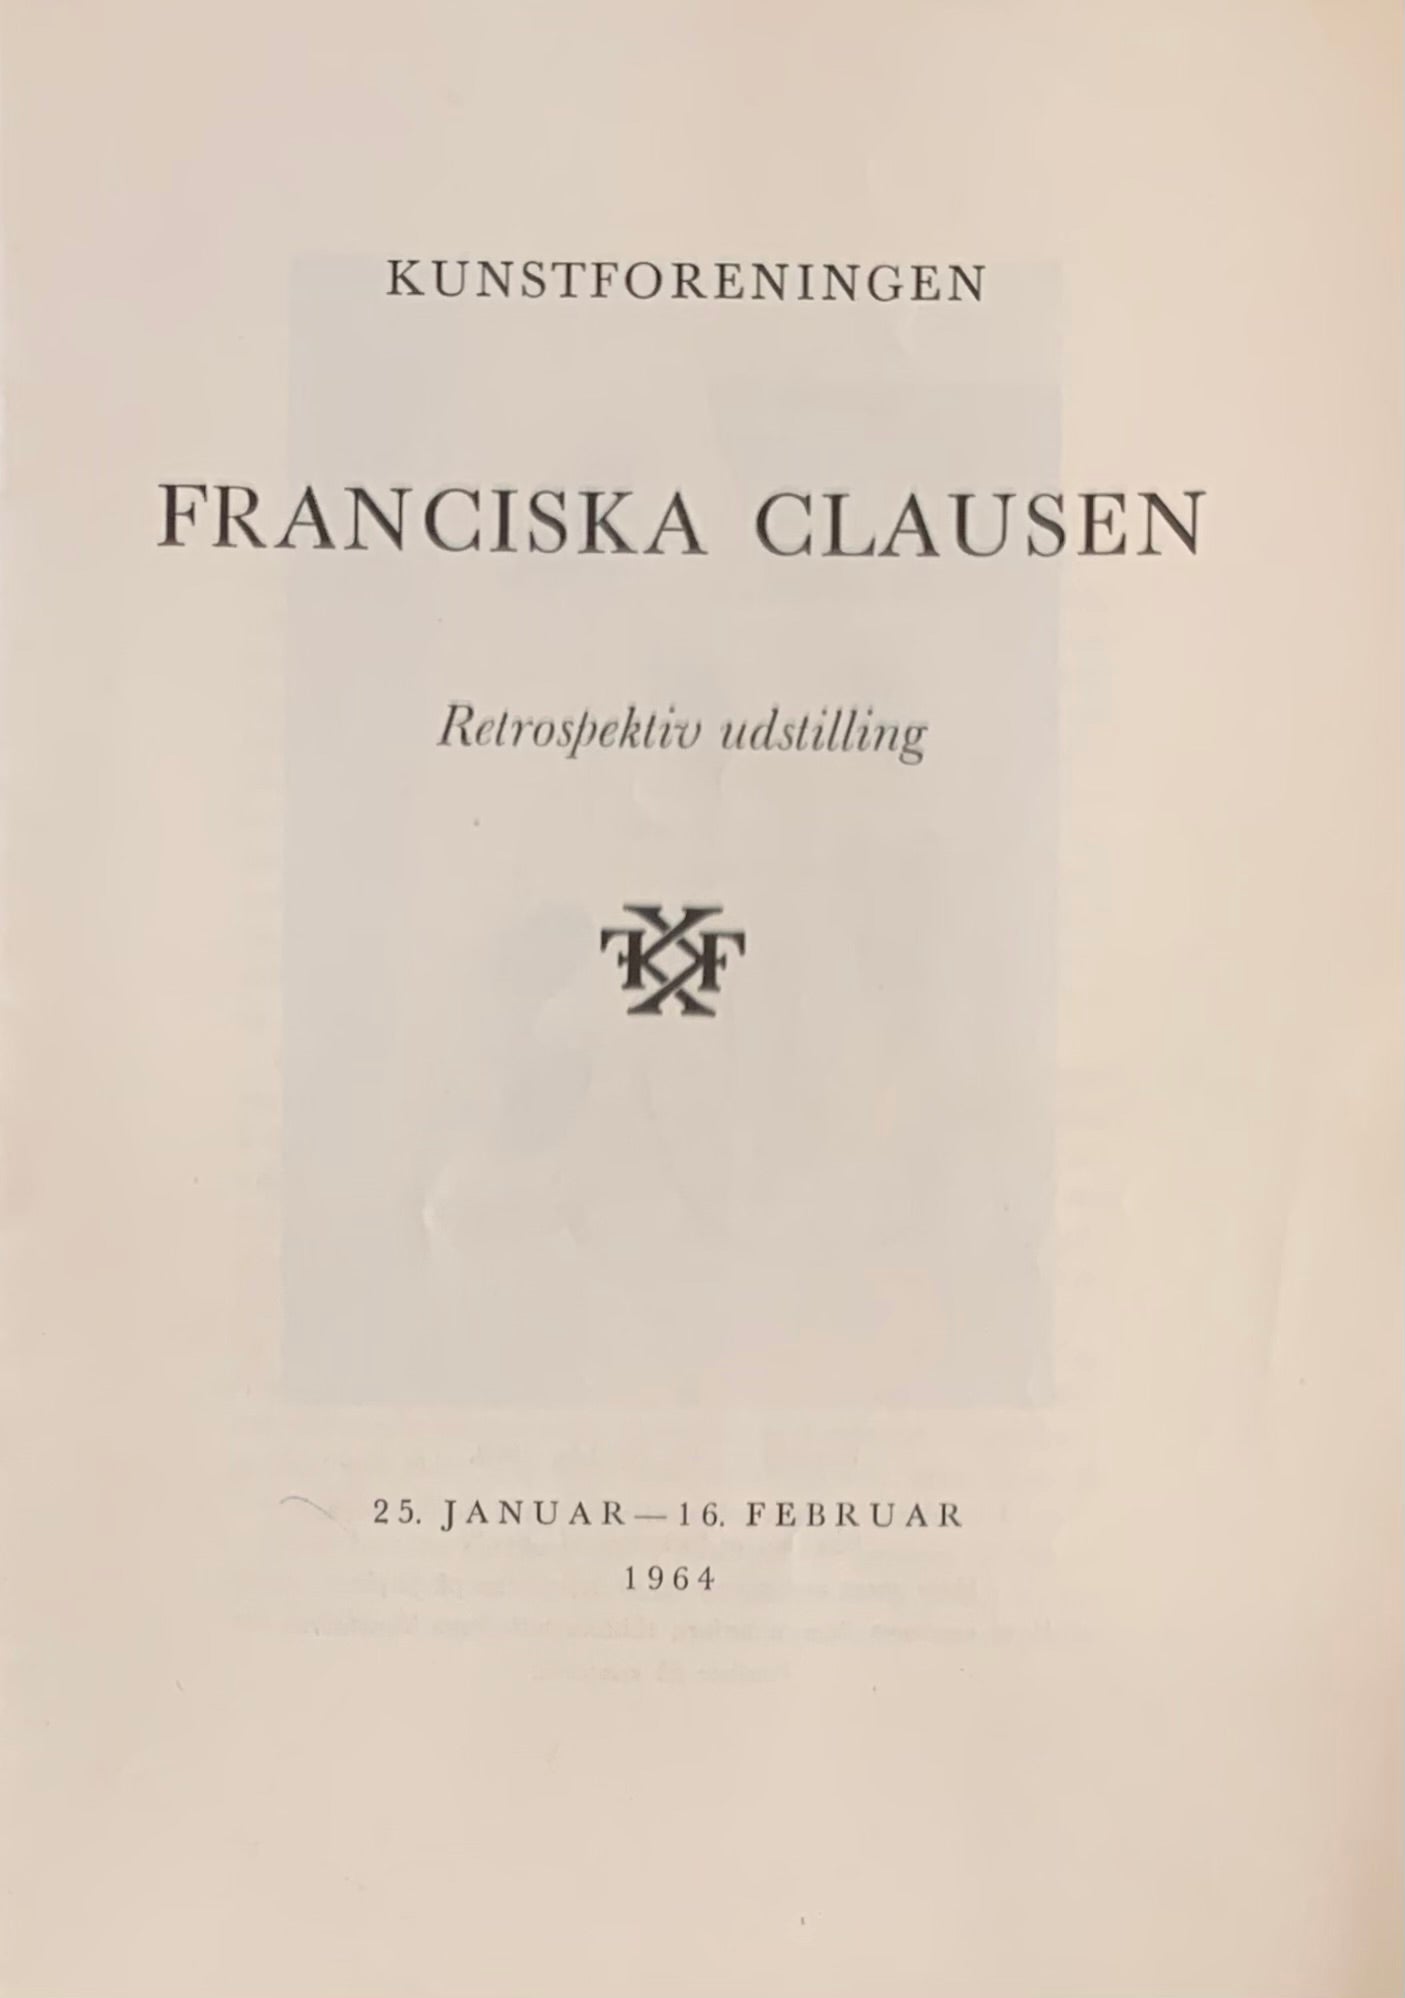 Franciska Clausen. Three booklets